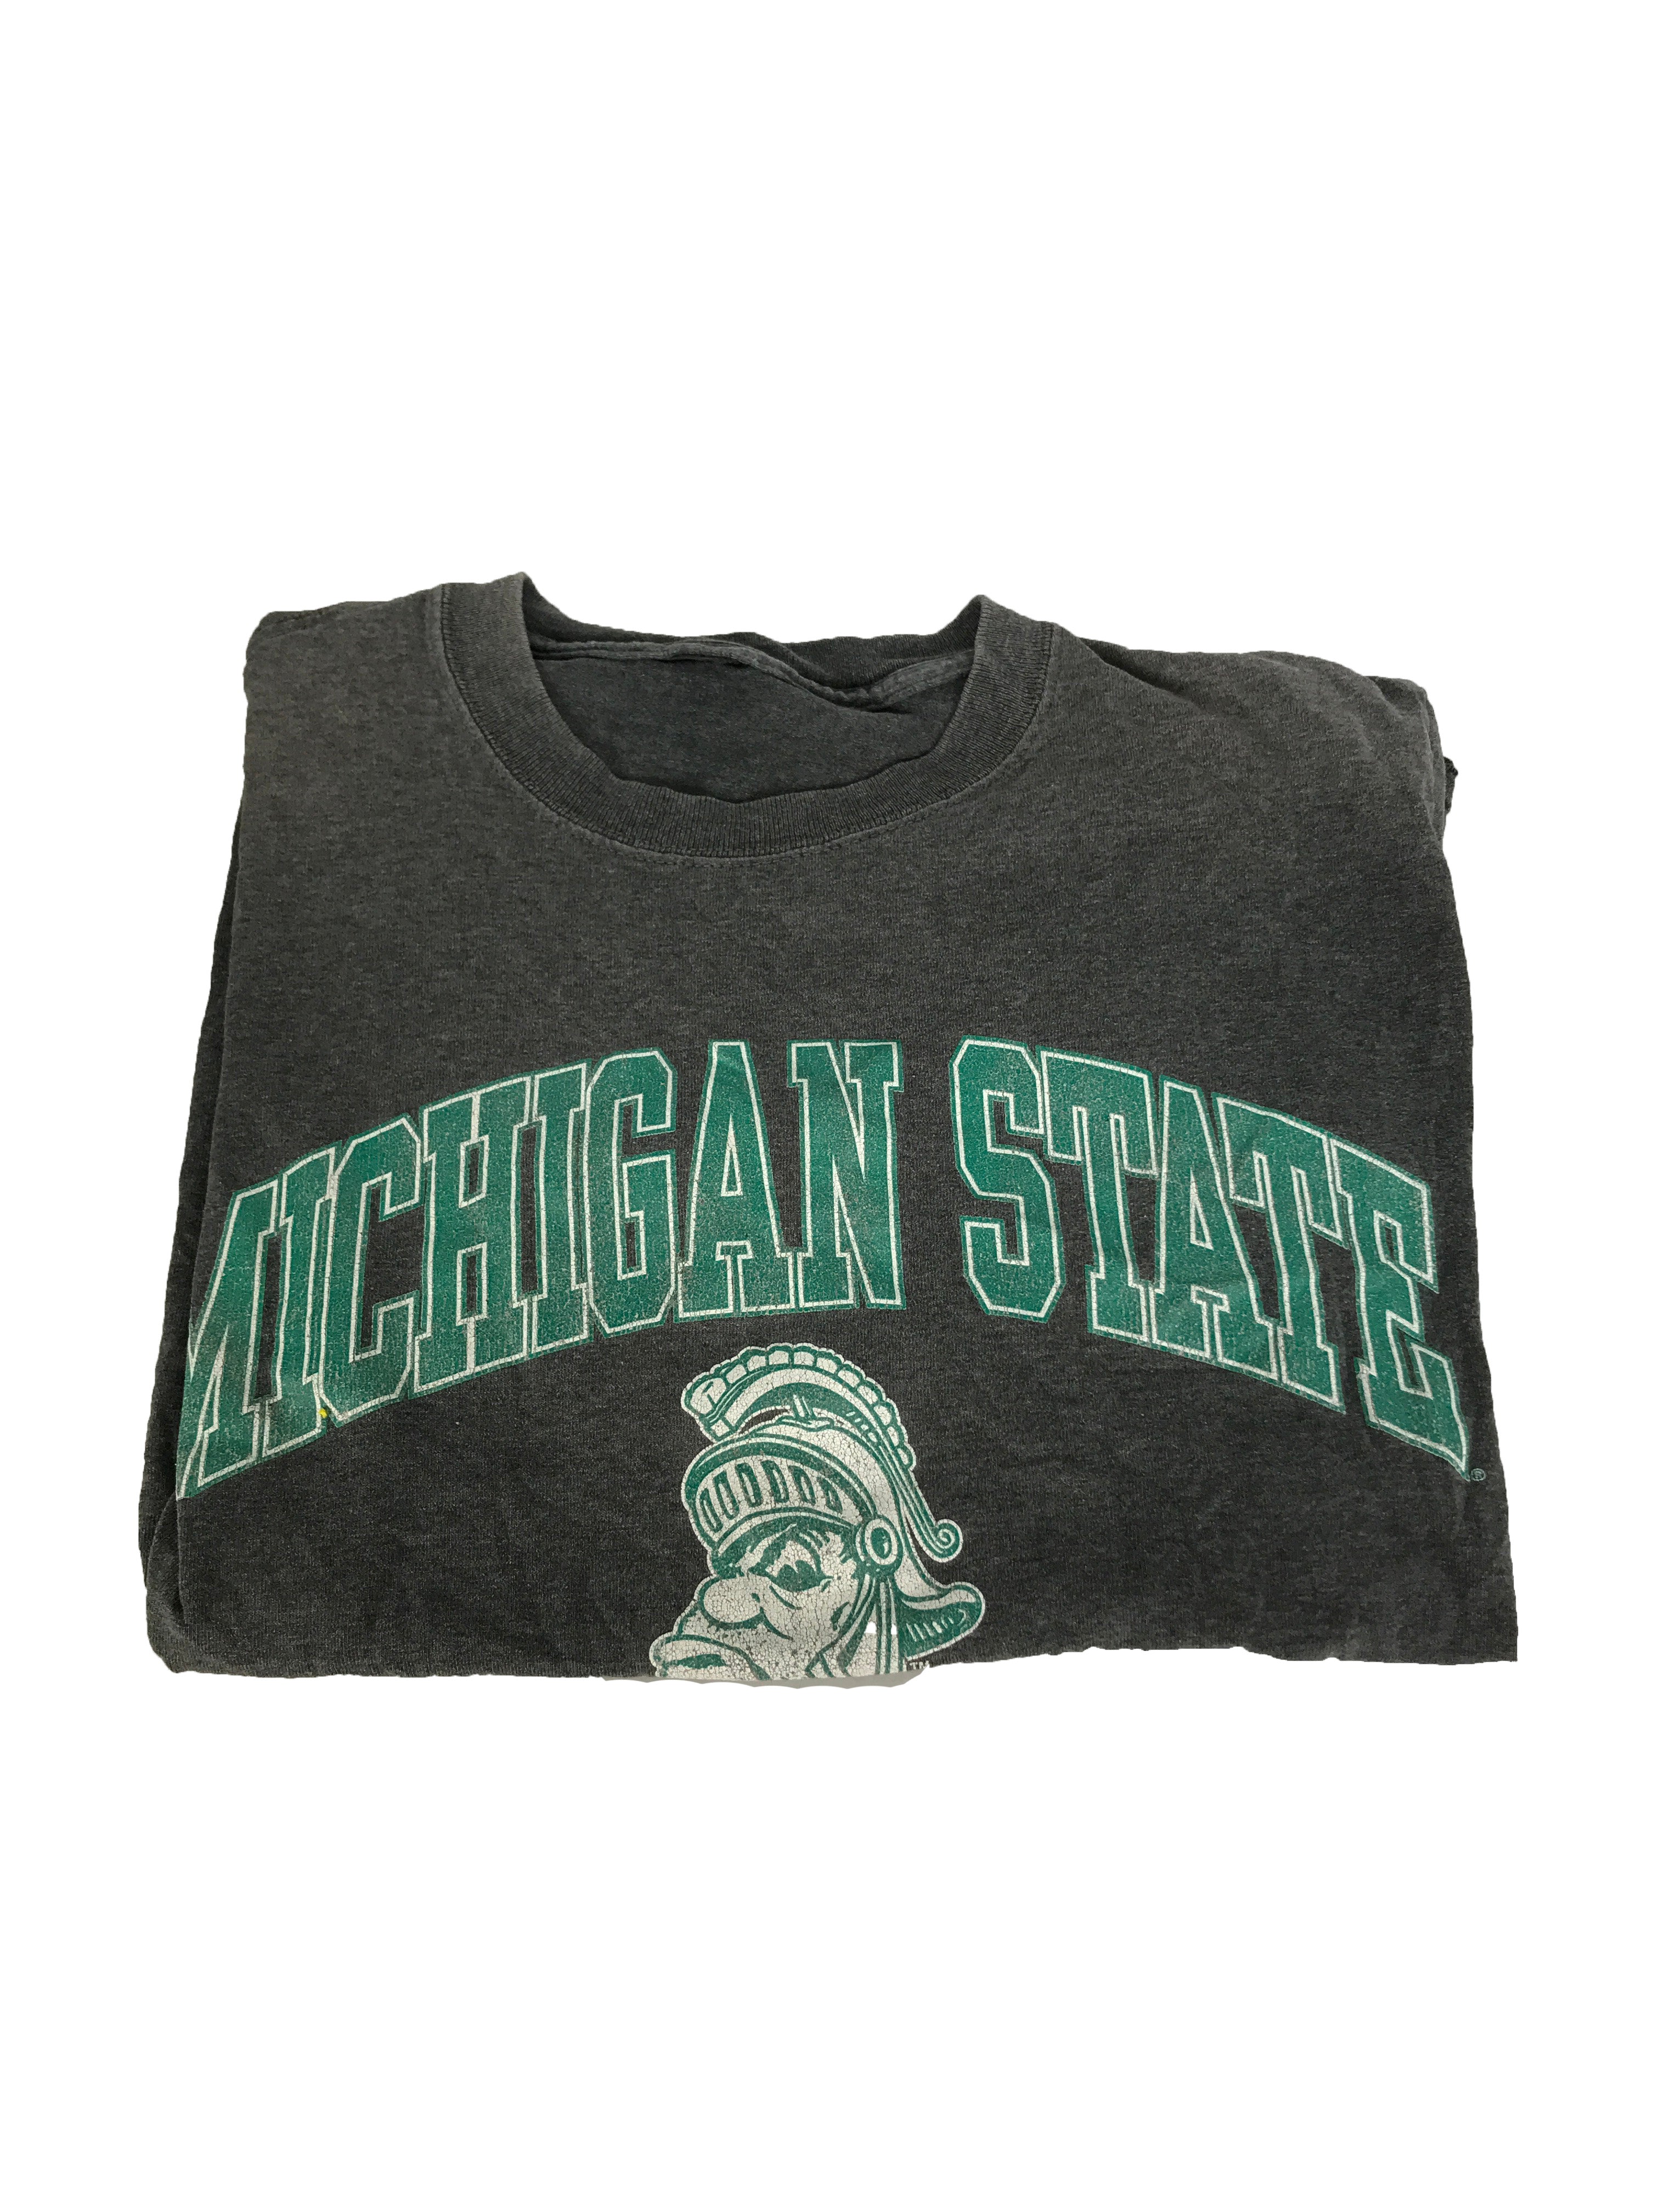 Grey Michigan State T-Shirt Women's Size S